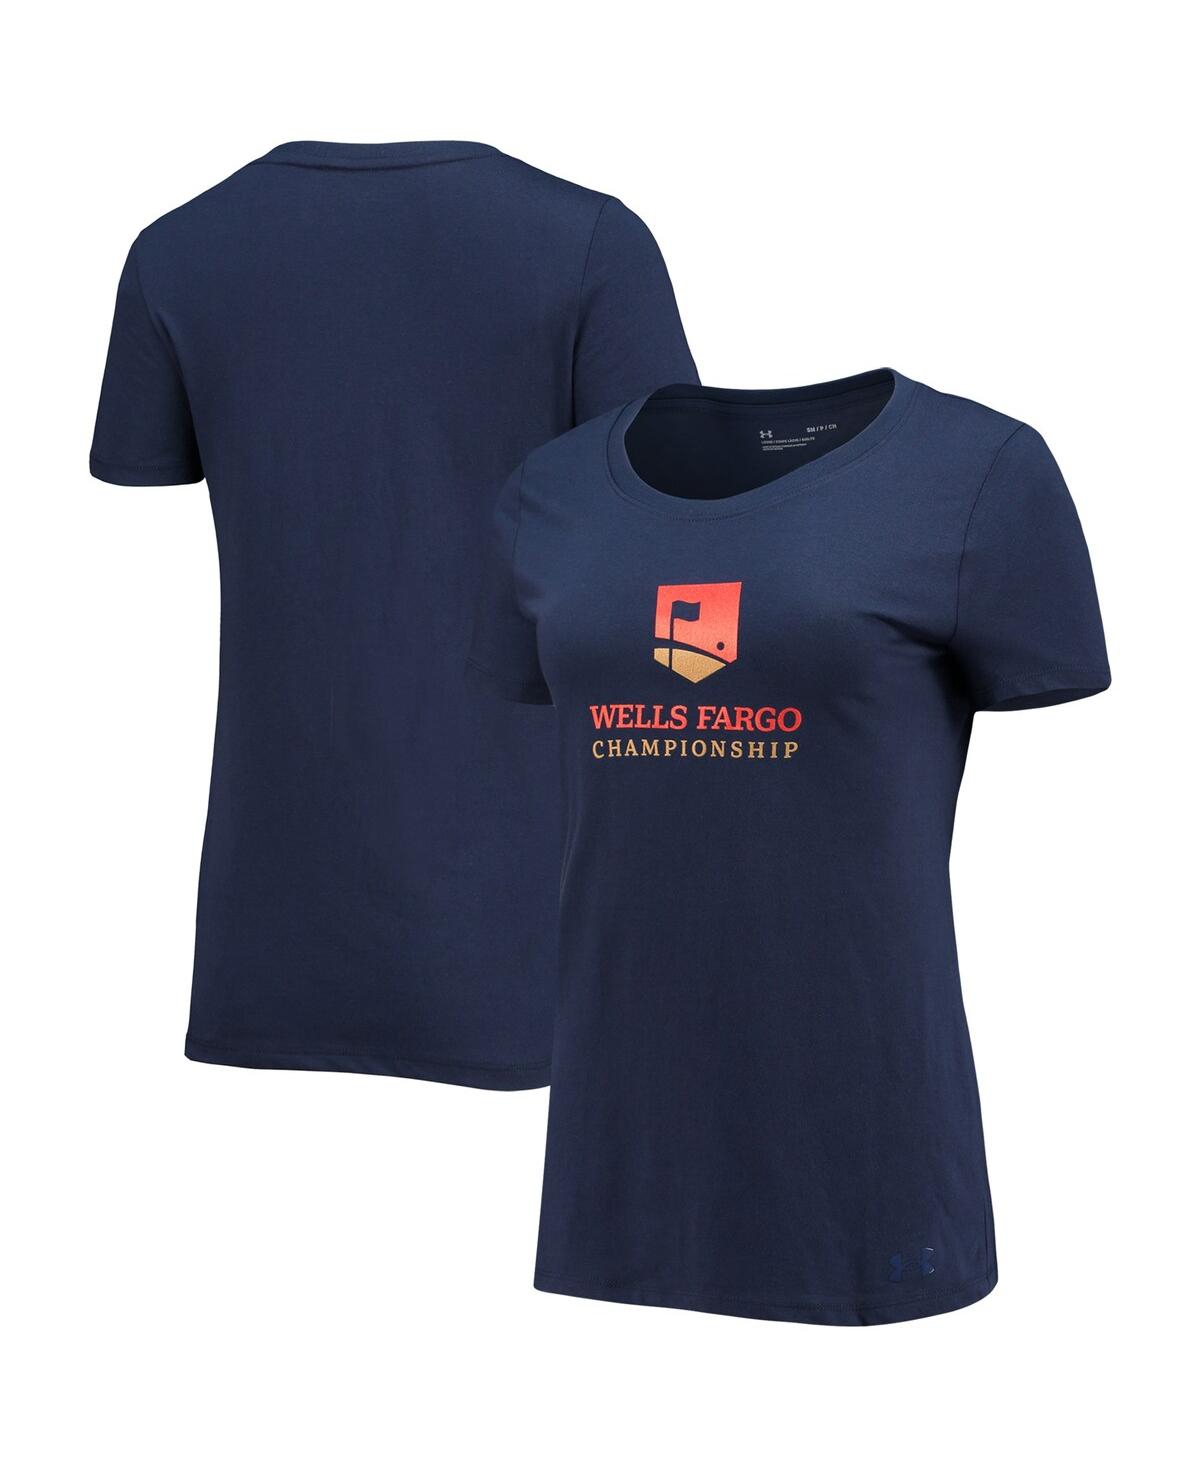 Women's Under Armour Navy Wells Fargo Championship T-shirt - Navy